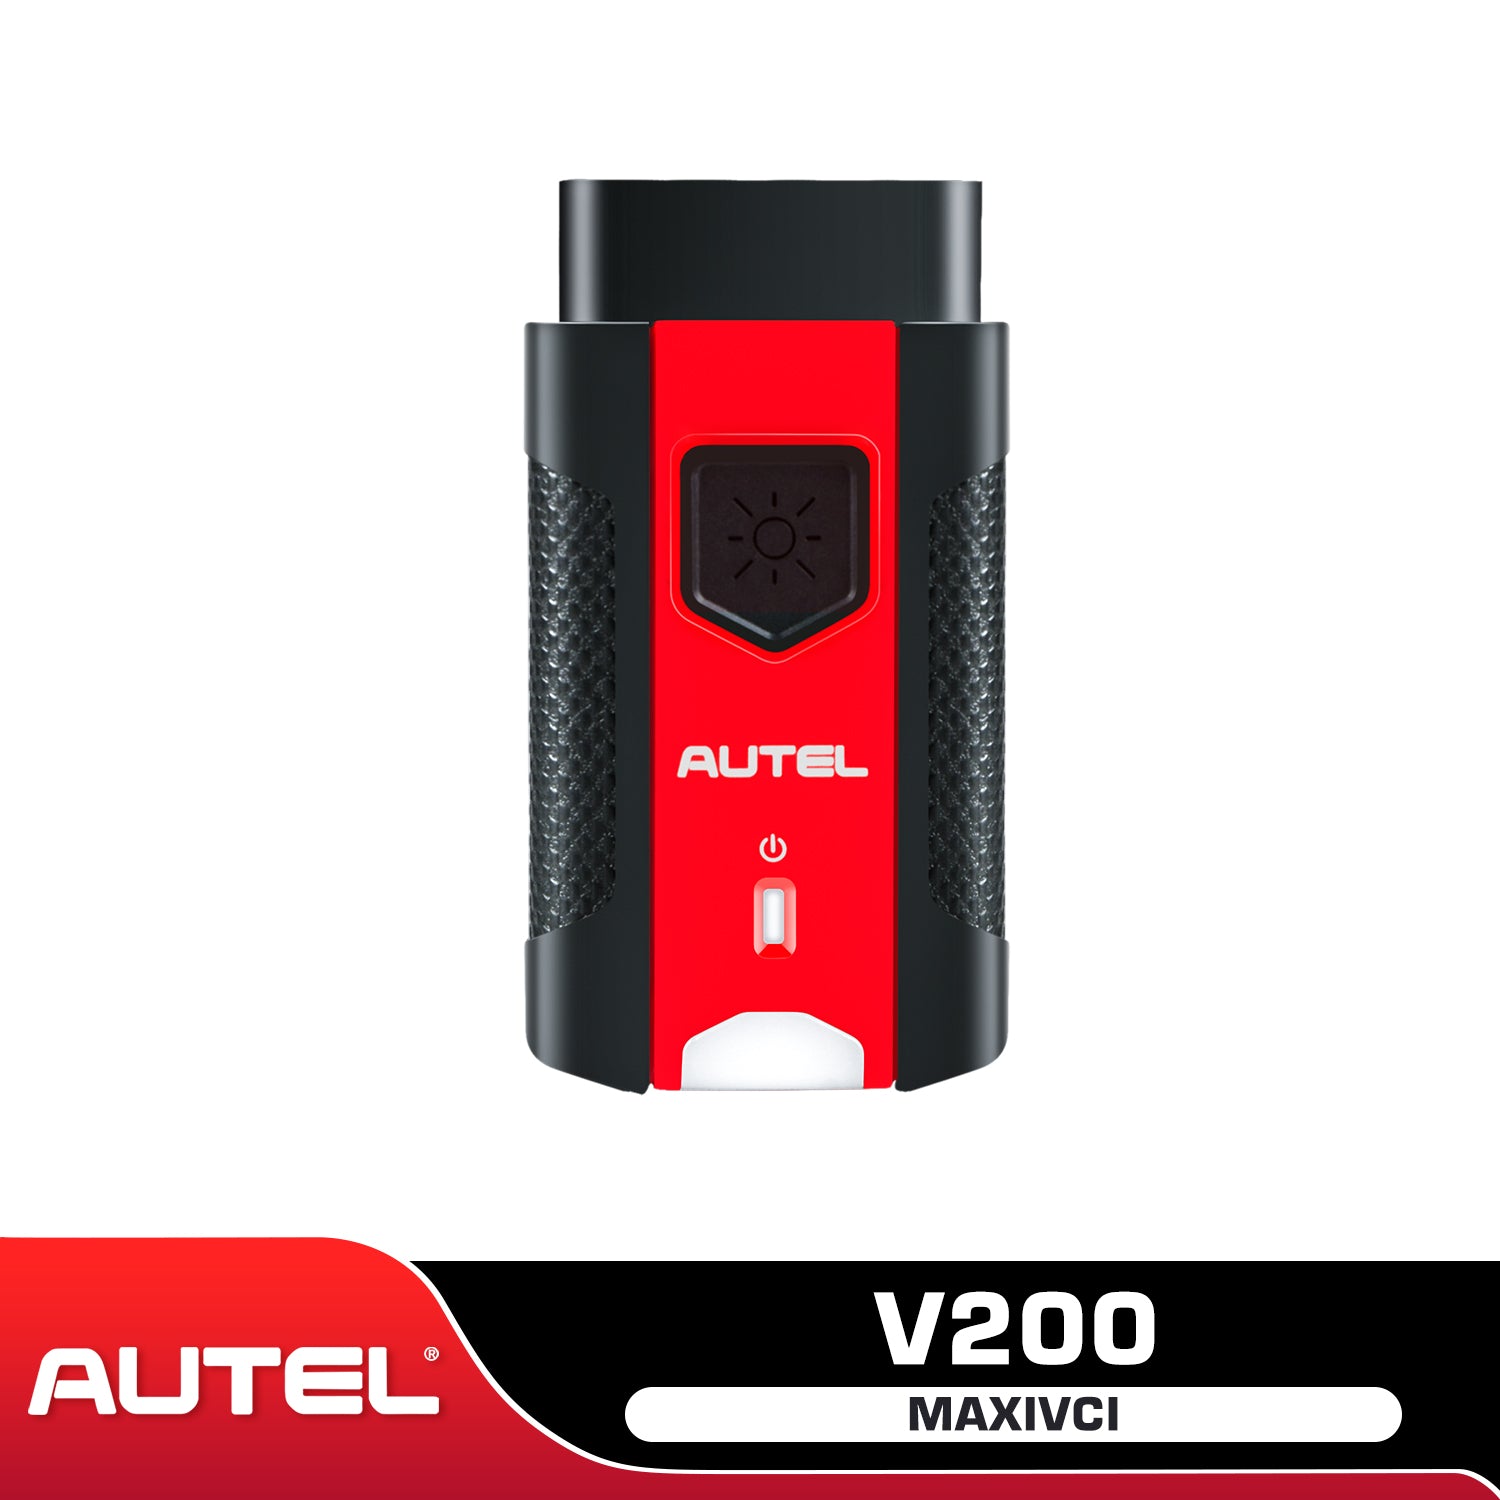 Bluetooth Adapter MaxiVCI Mini VCI for Autel MaxiCOM MK808BT PRO, Autel- MK808BT-Pro